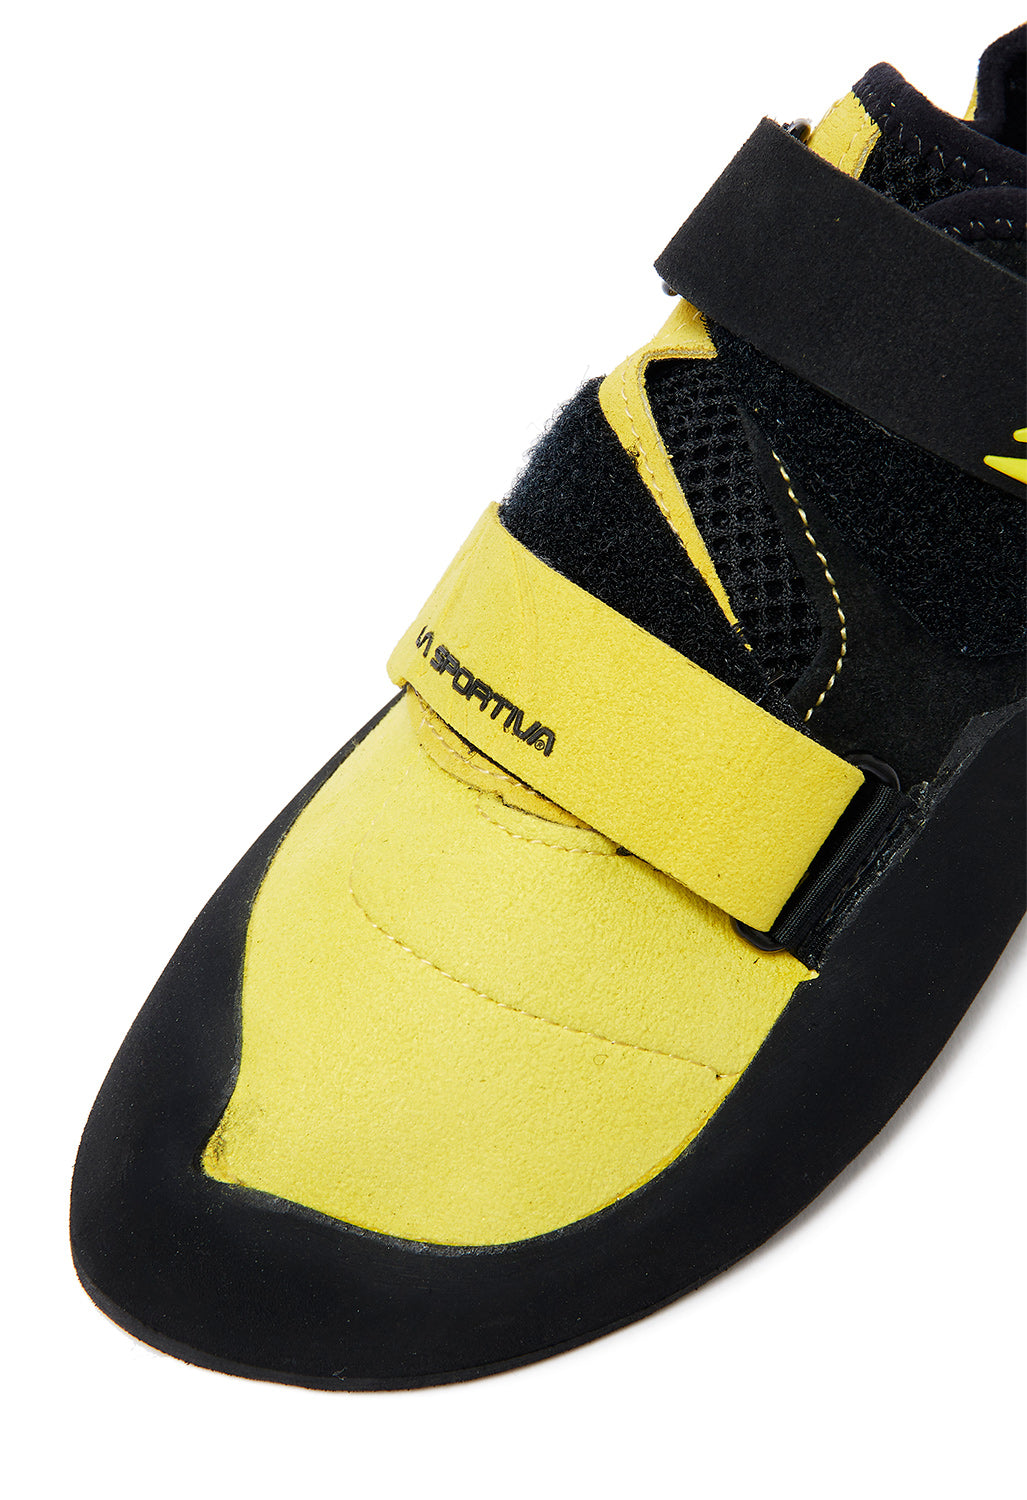 La Sportiva Katana Men's Shoes - Yellow/Black